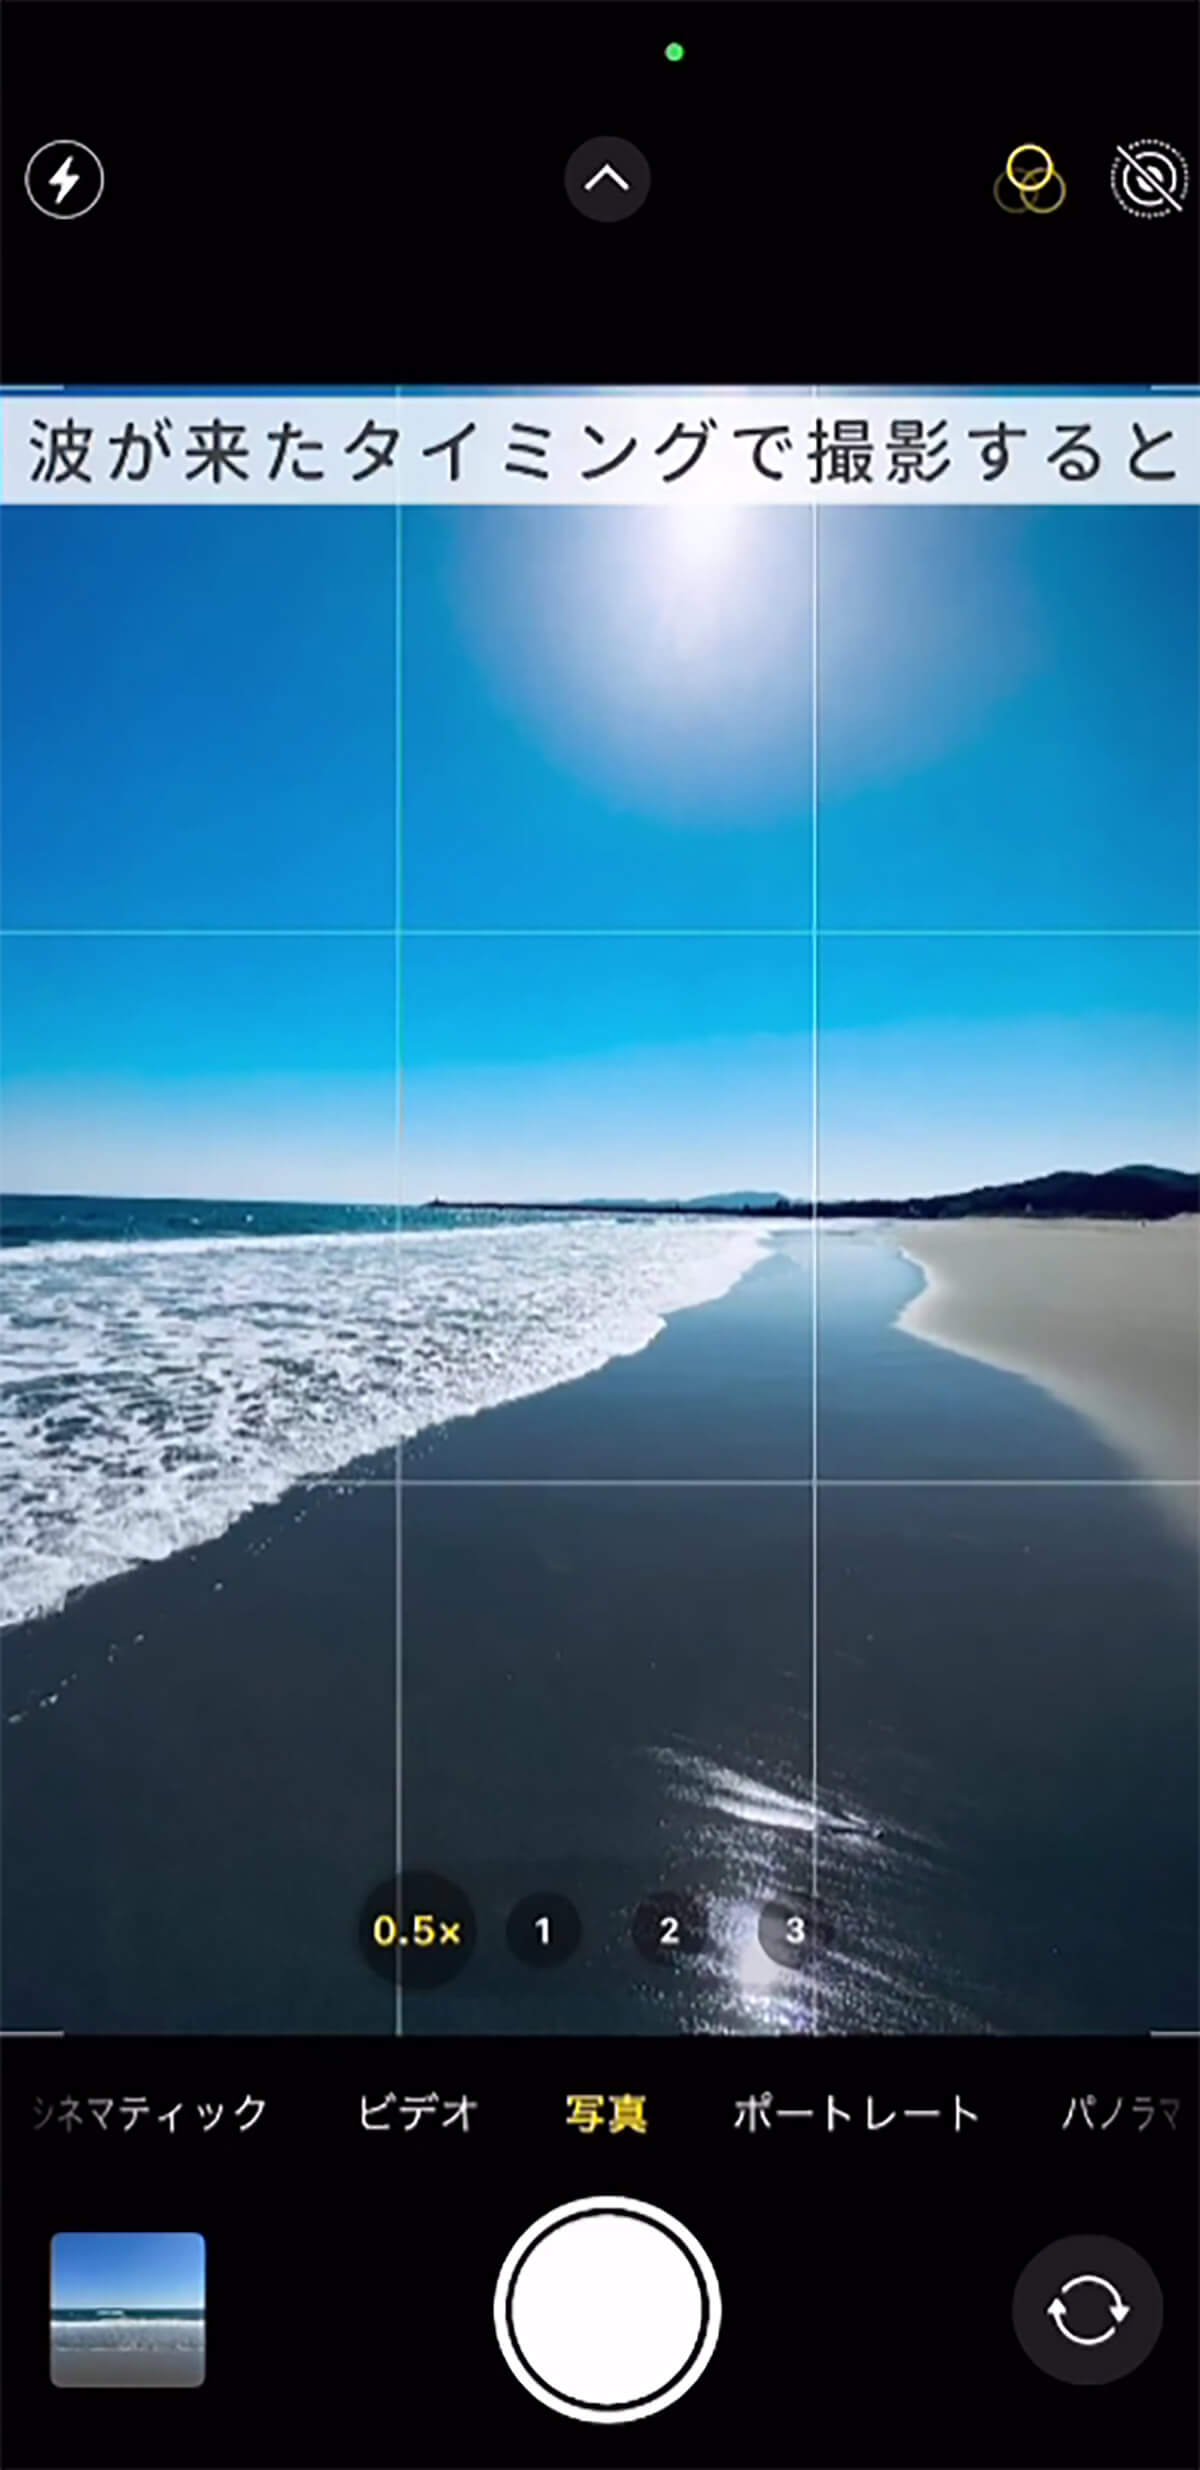 iPhoneで海の写真をダイナミックに撮影する方法5